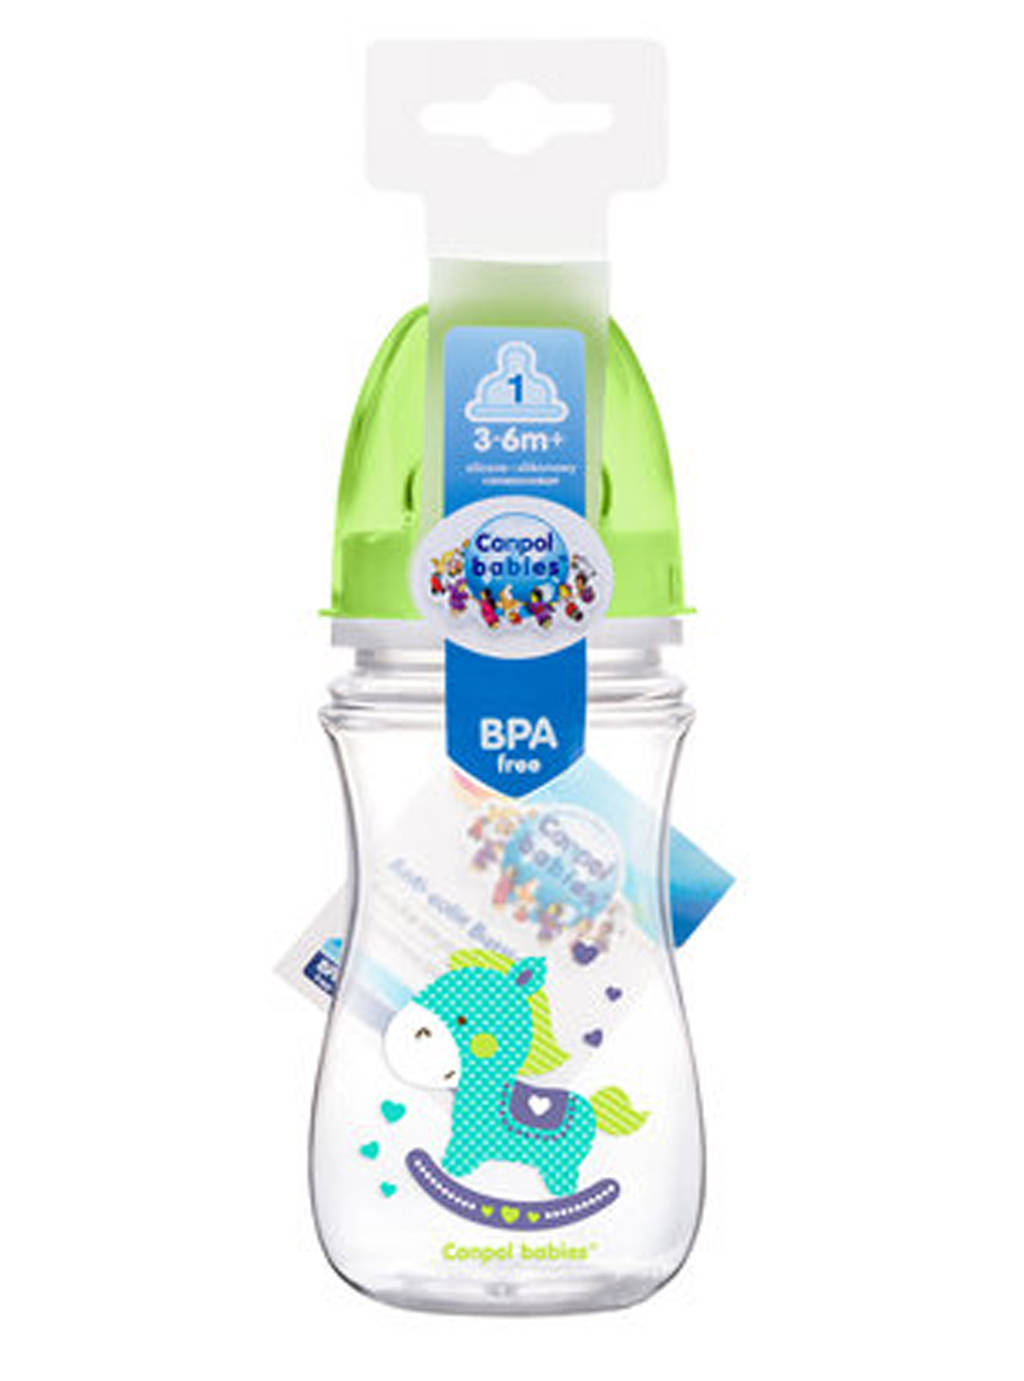 Canpol butelka antykolkowa Toys 240ml - zielona